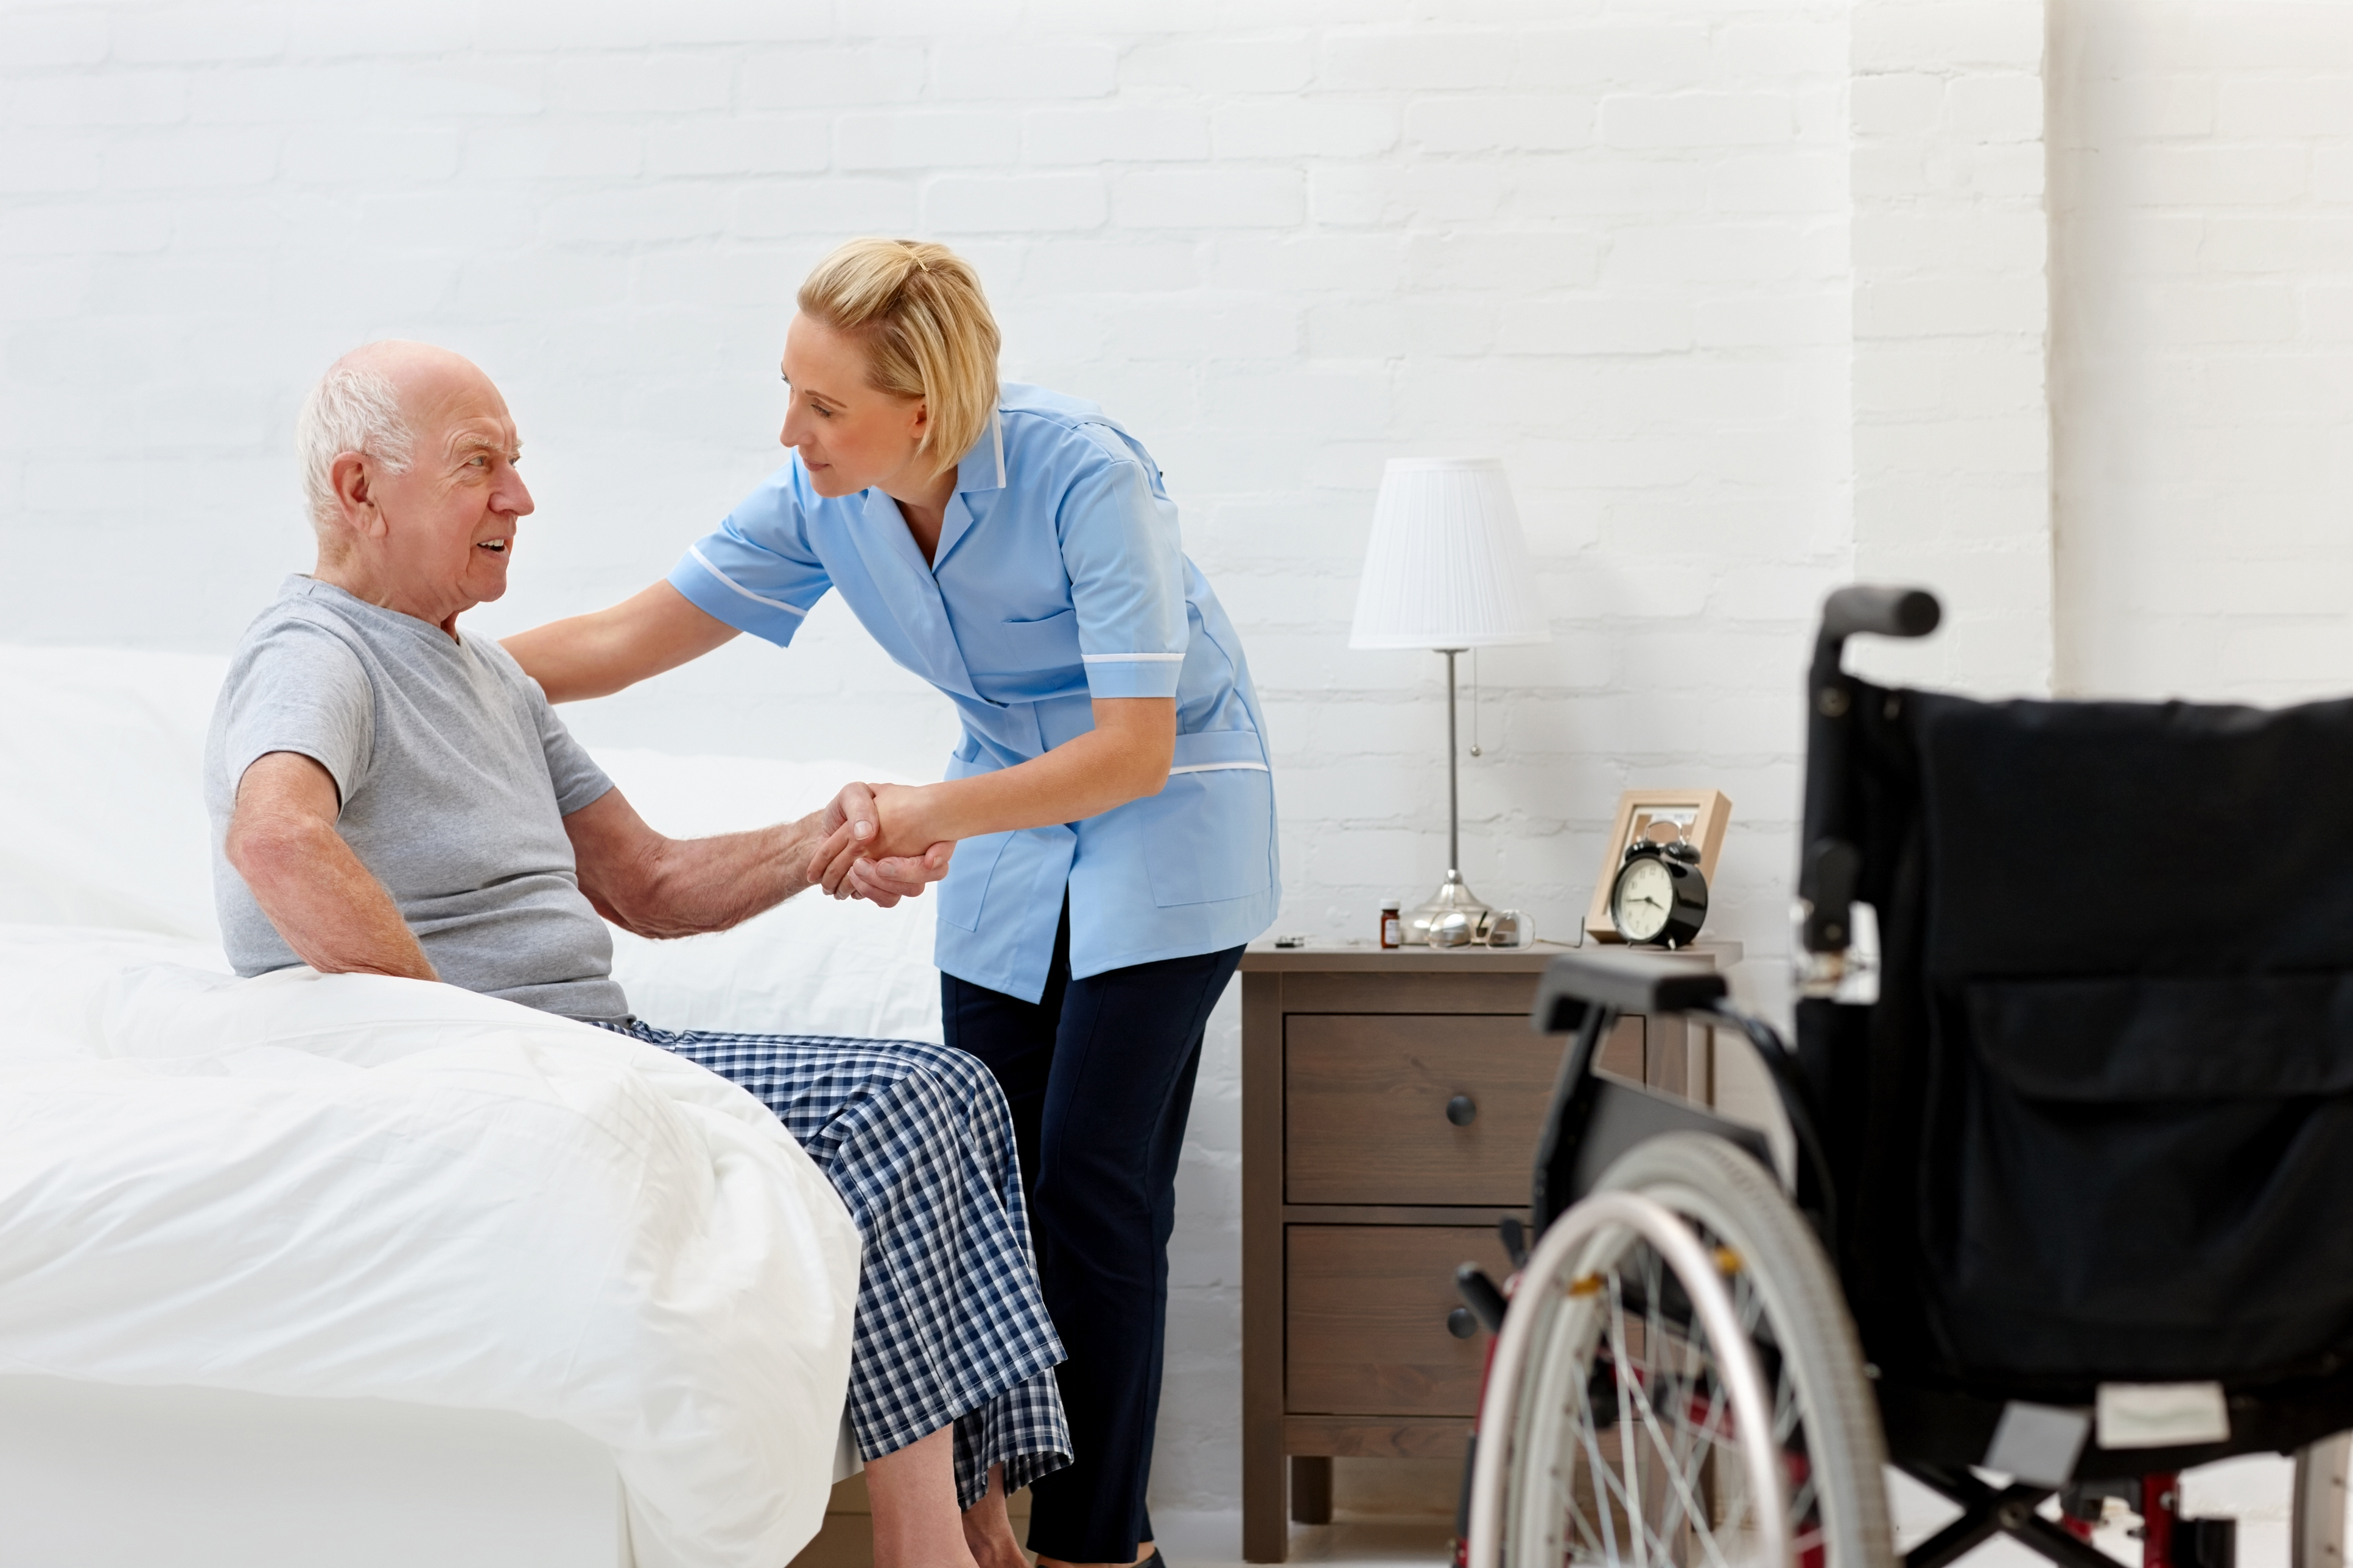 Studies show elderly patients require more nutrition during respite care